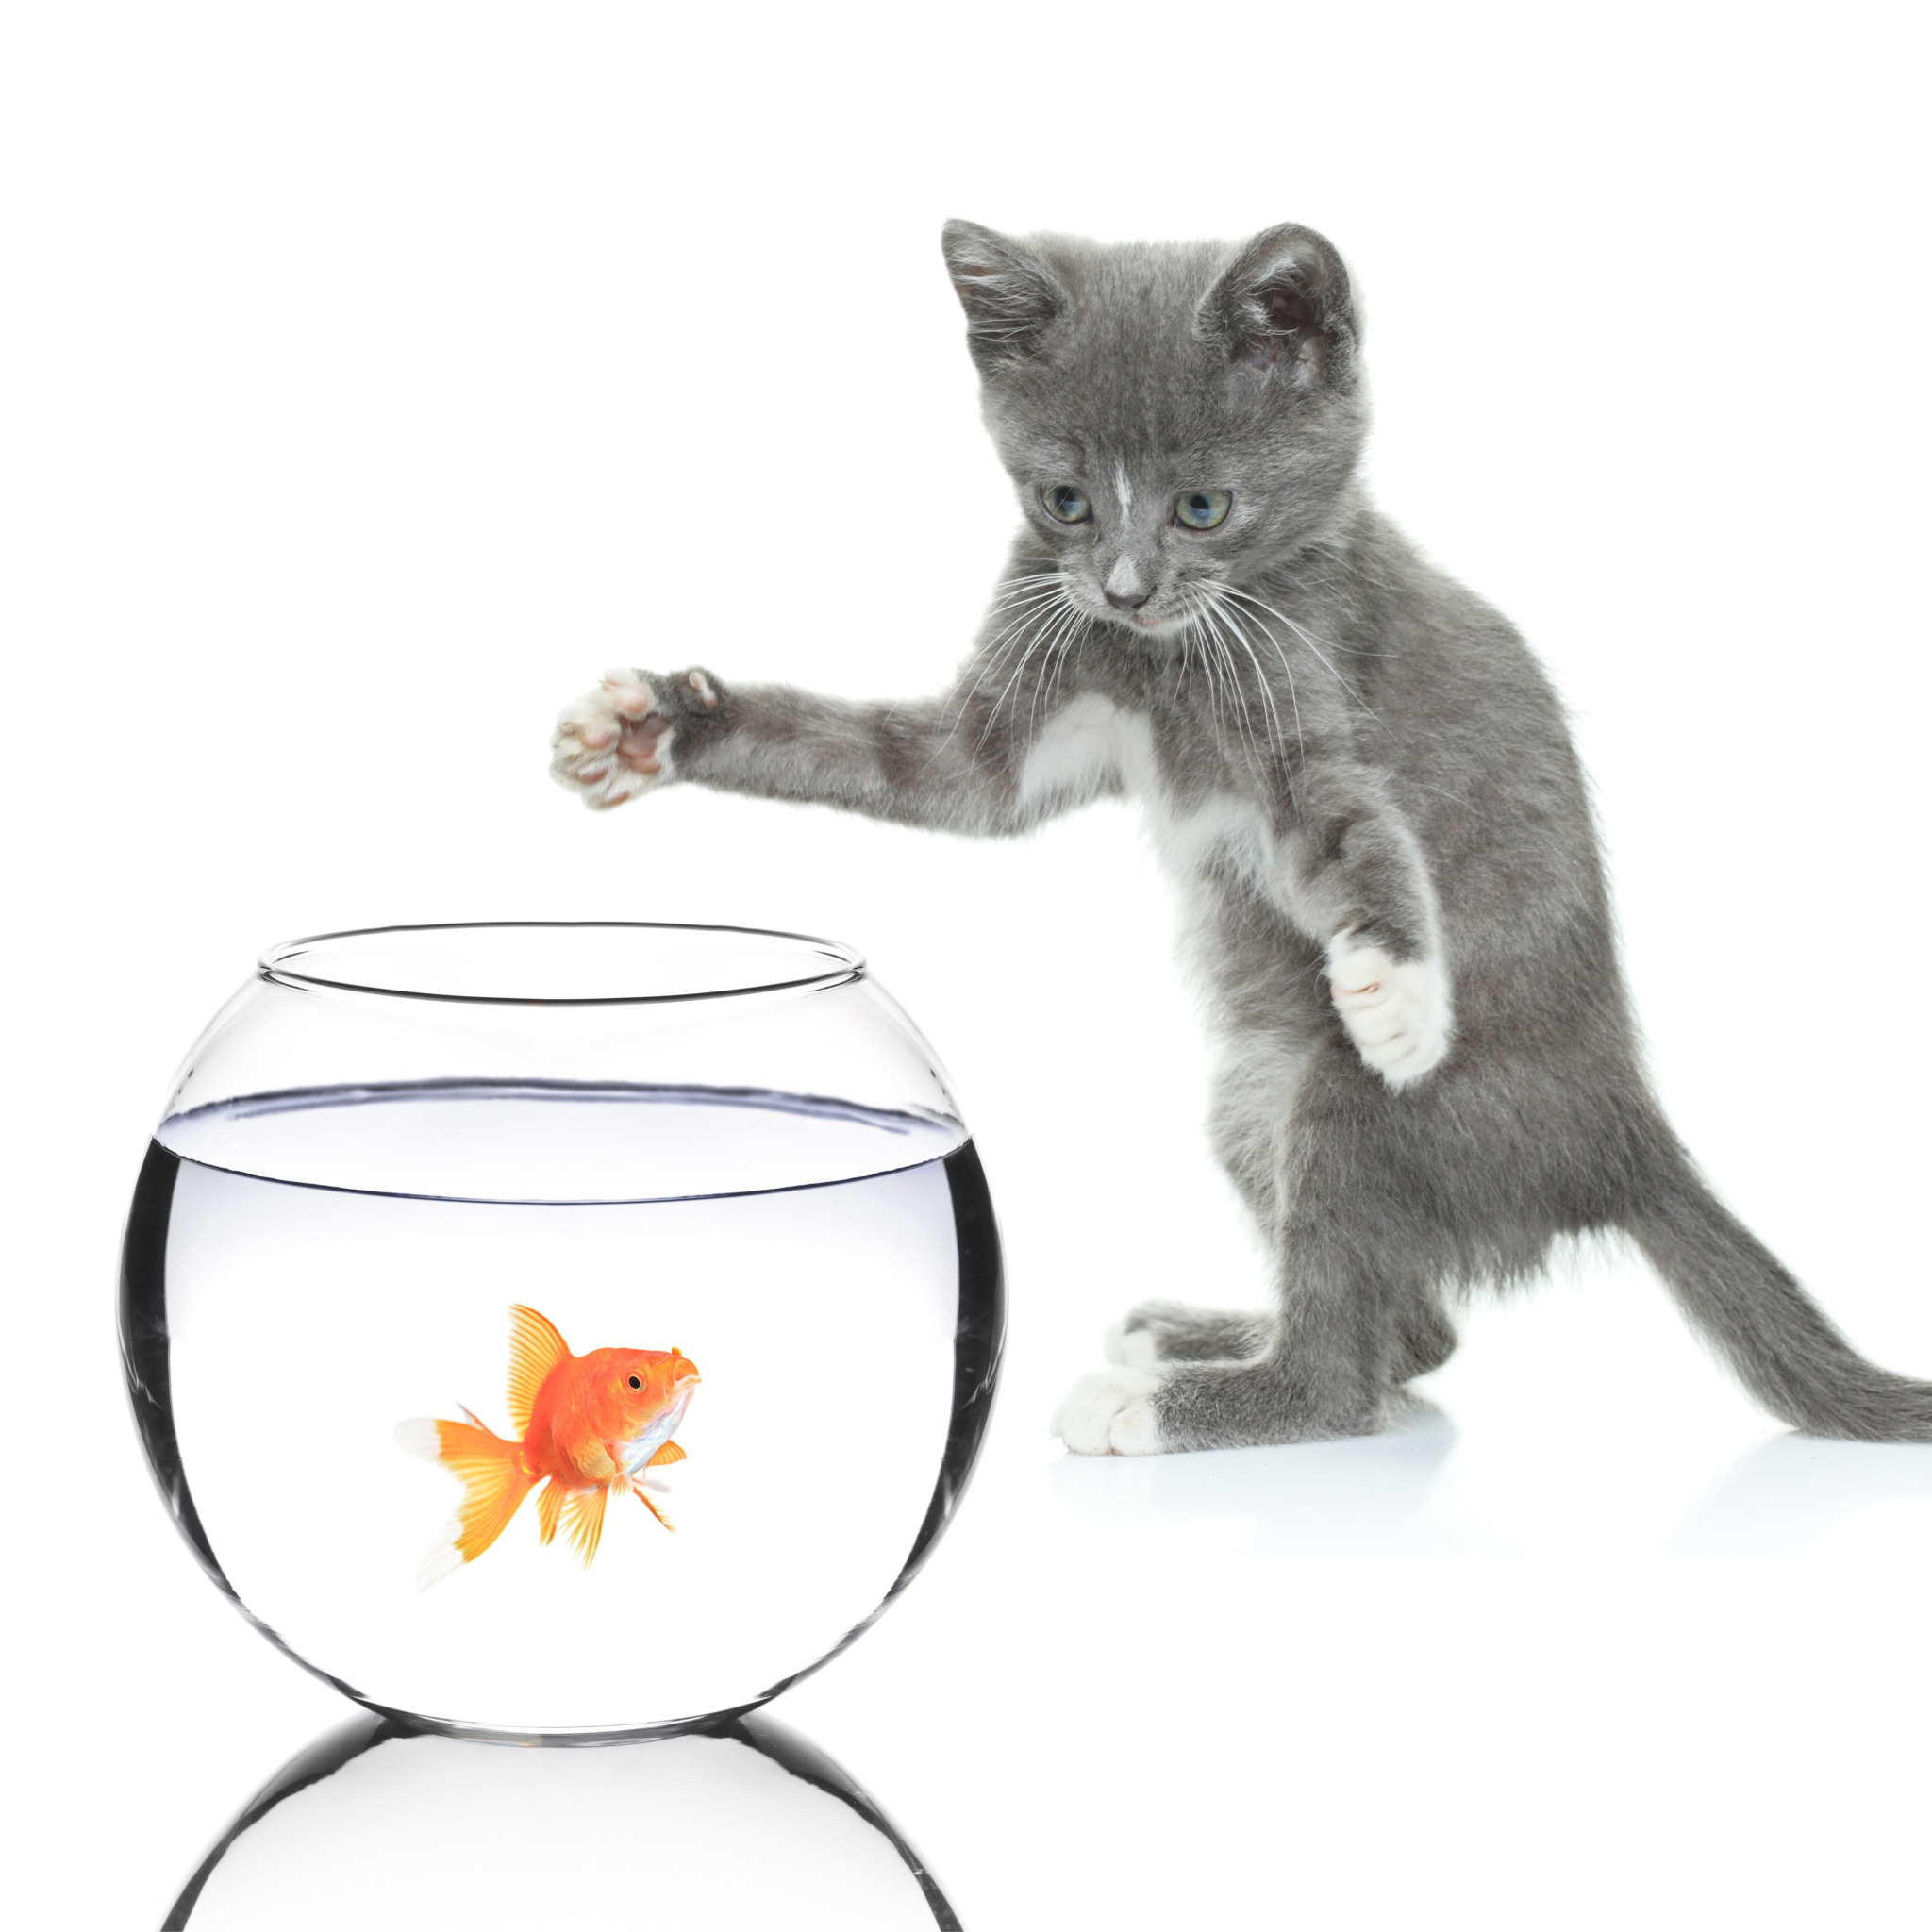 Аквариум для кота внутри. Кот и рыбка в аквариуме. Котенок и аквариум. Котенок с рыбкой. Аквариум на белом фоне.